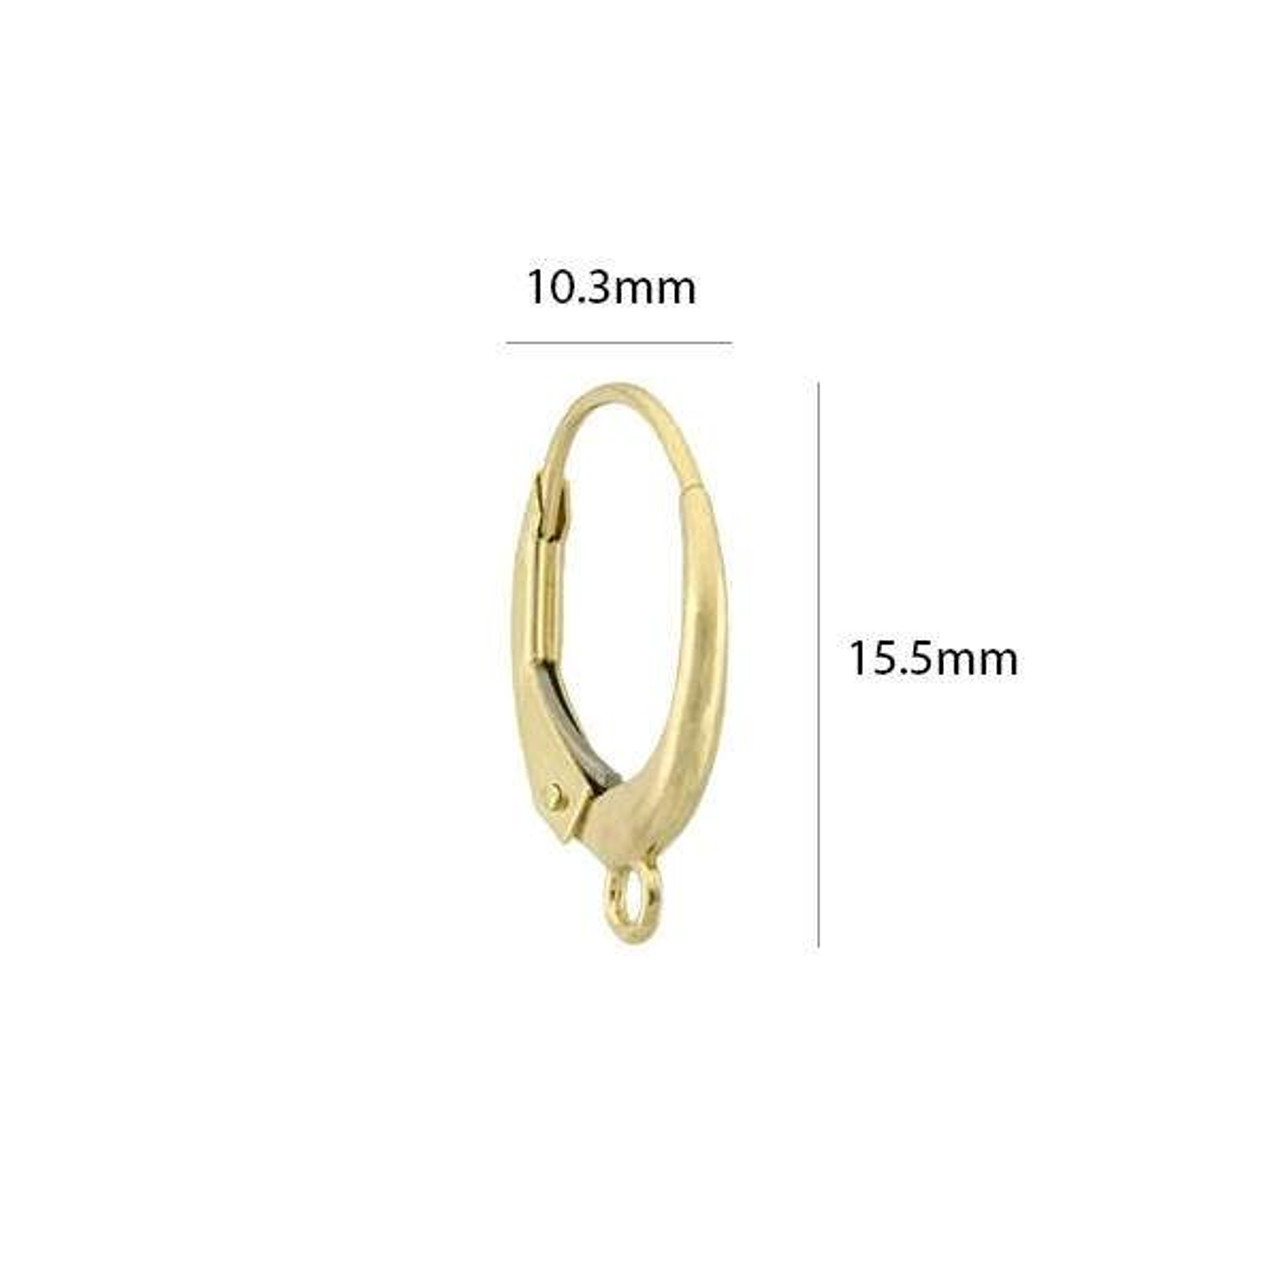 2 PCS 14K Gold Filled Lever Back Earring Hooks Findings Plain Leverback  Earrings for DIY Jewelry Making - 17x11mm 